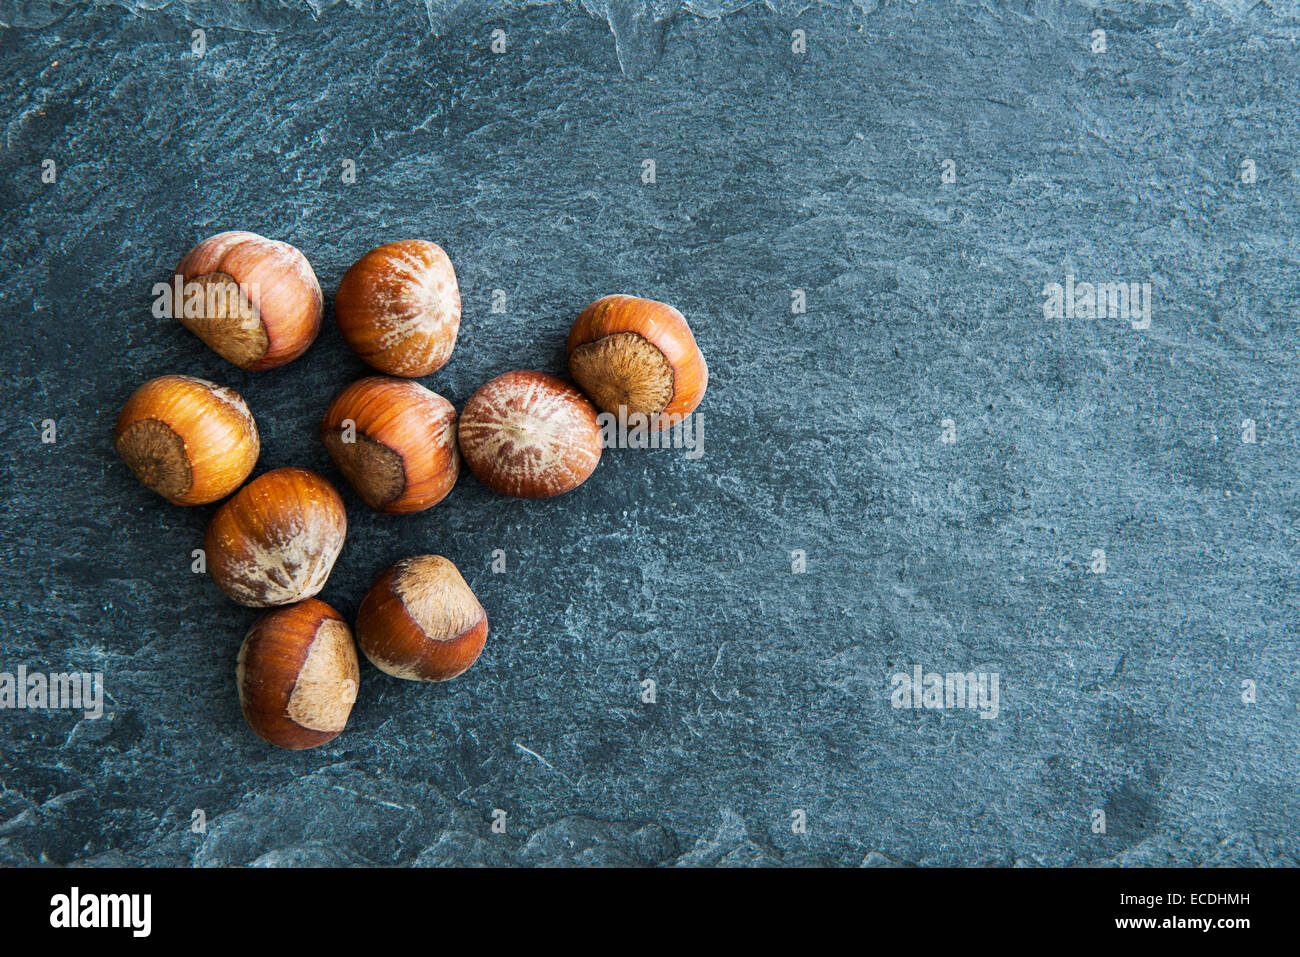 Closeup on hazelnuts on stone substrate Stock Photo